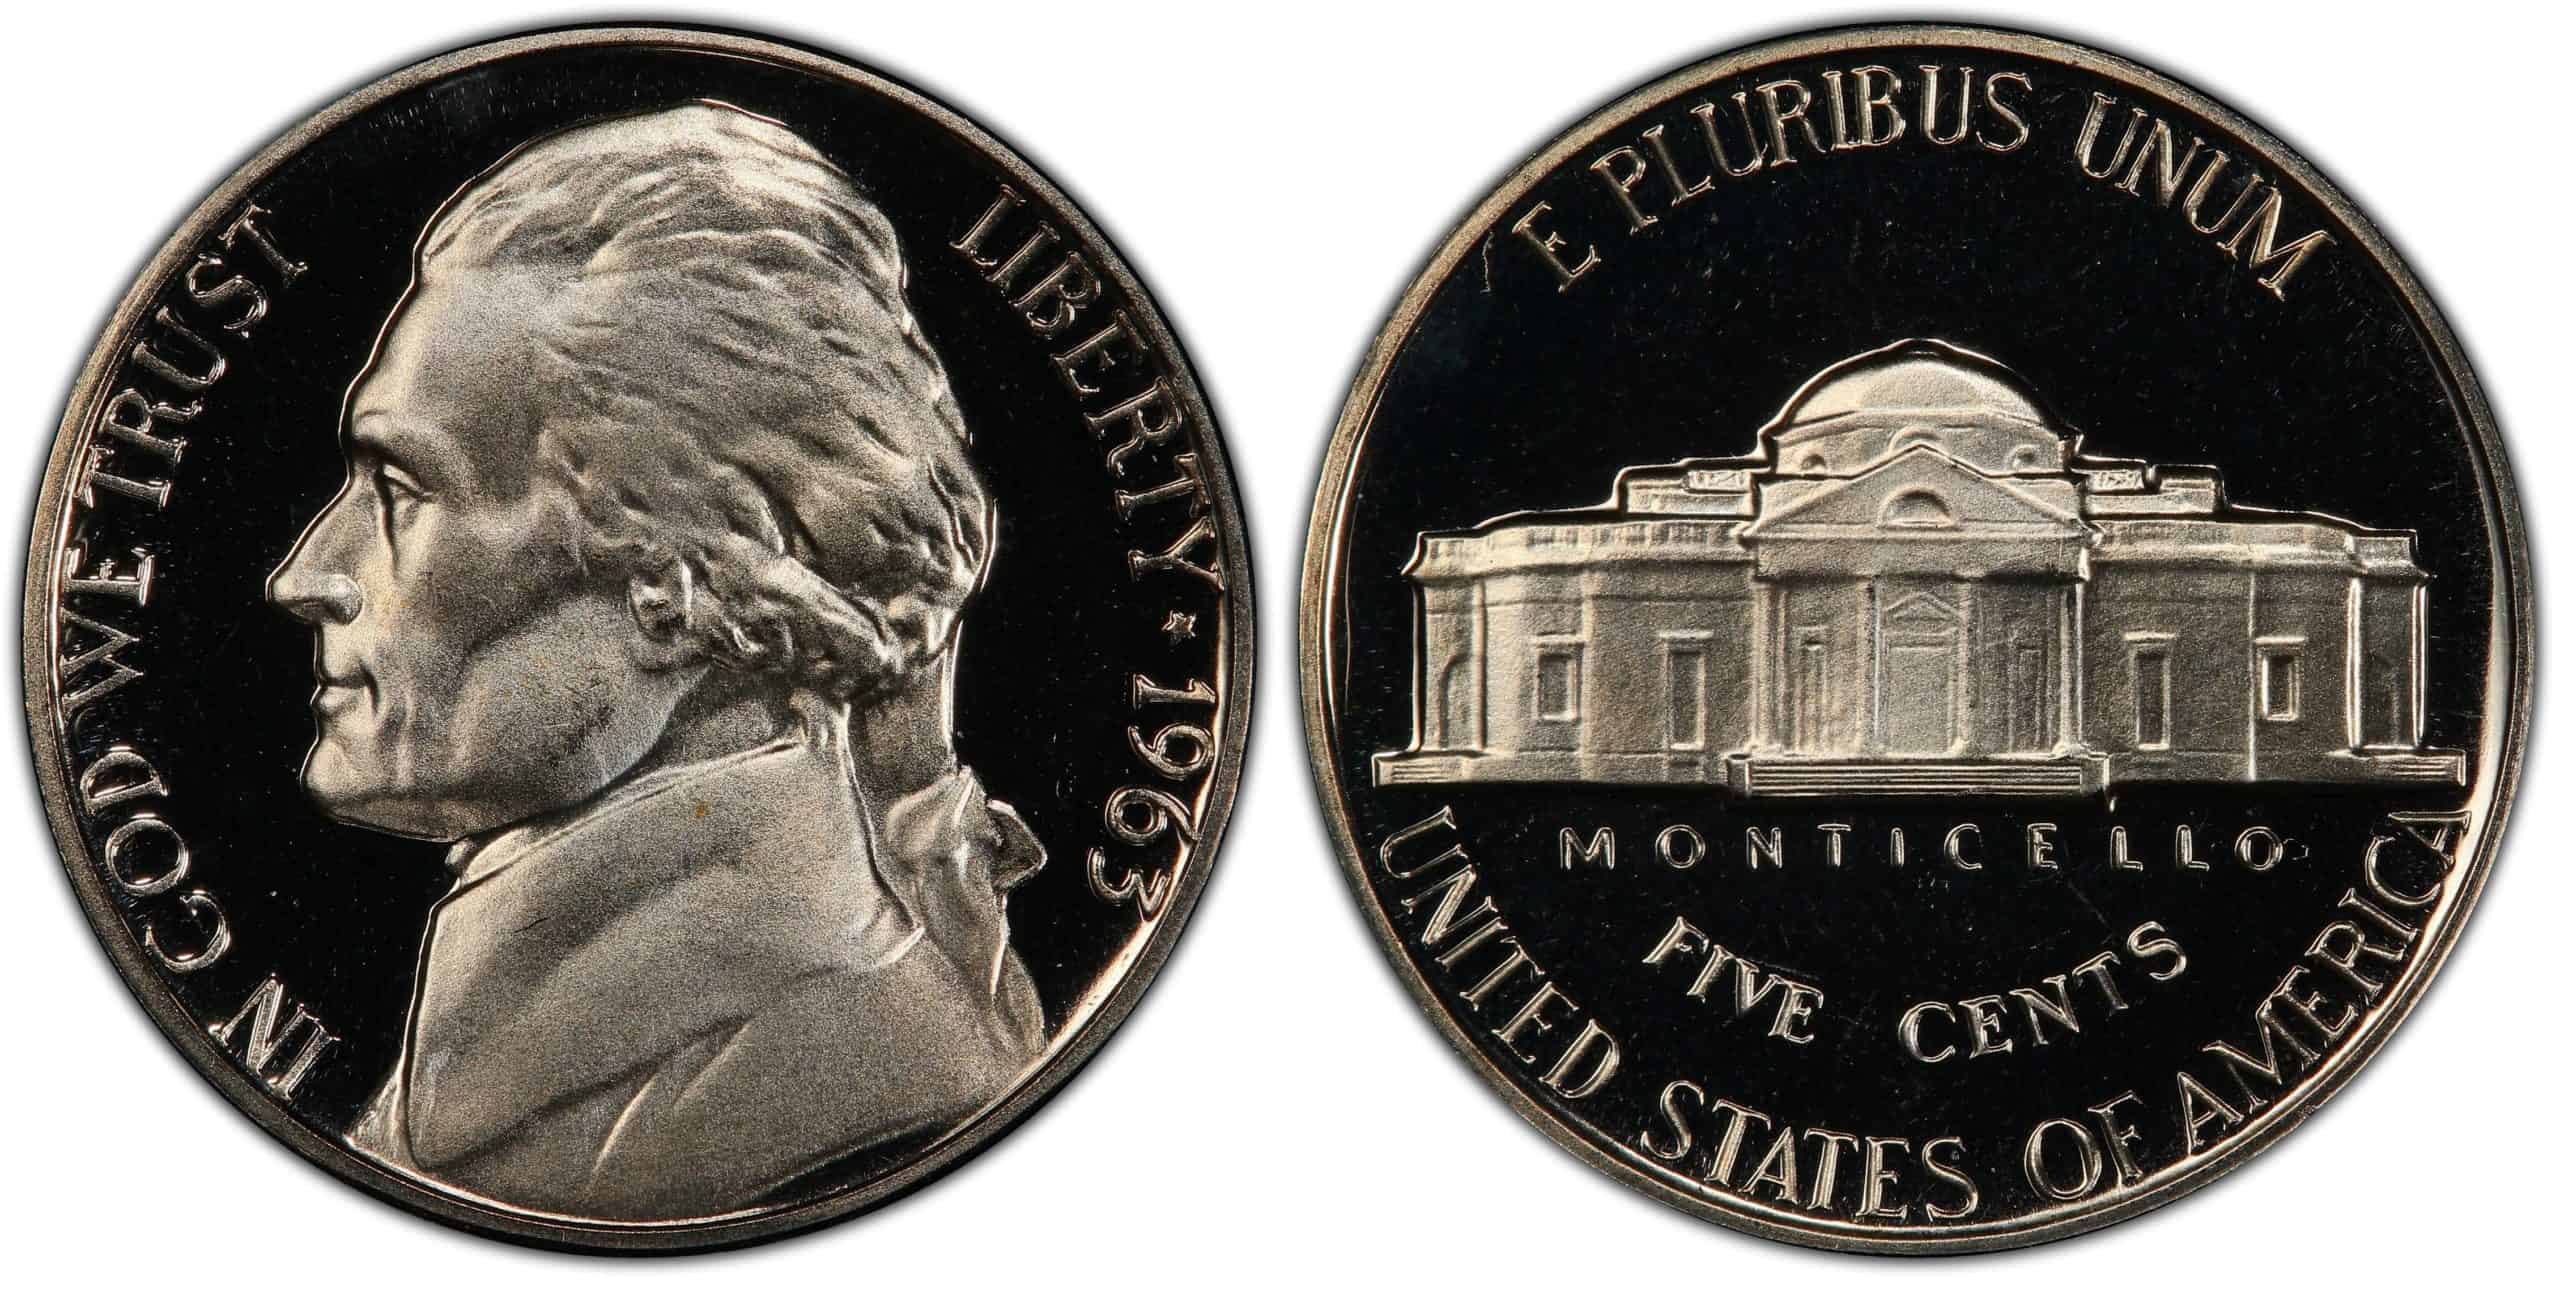 1963 proof Jefferson nickel